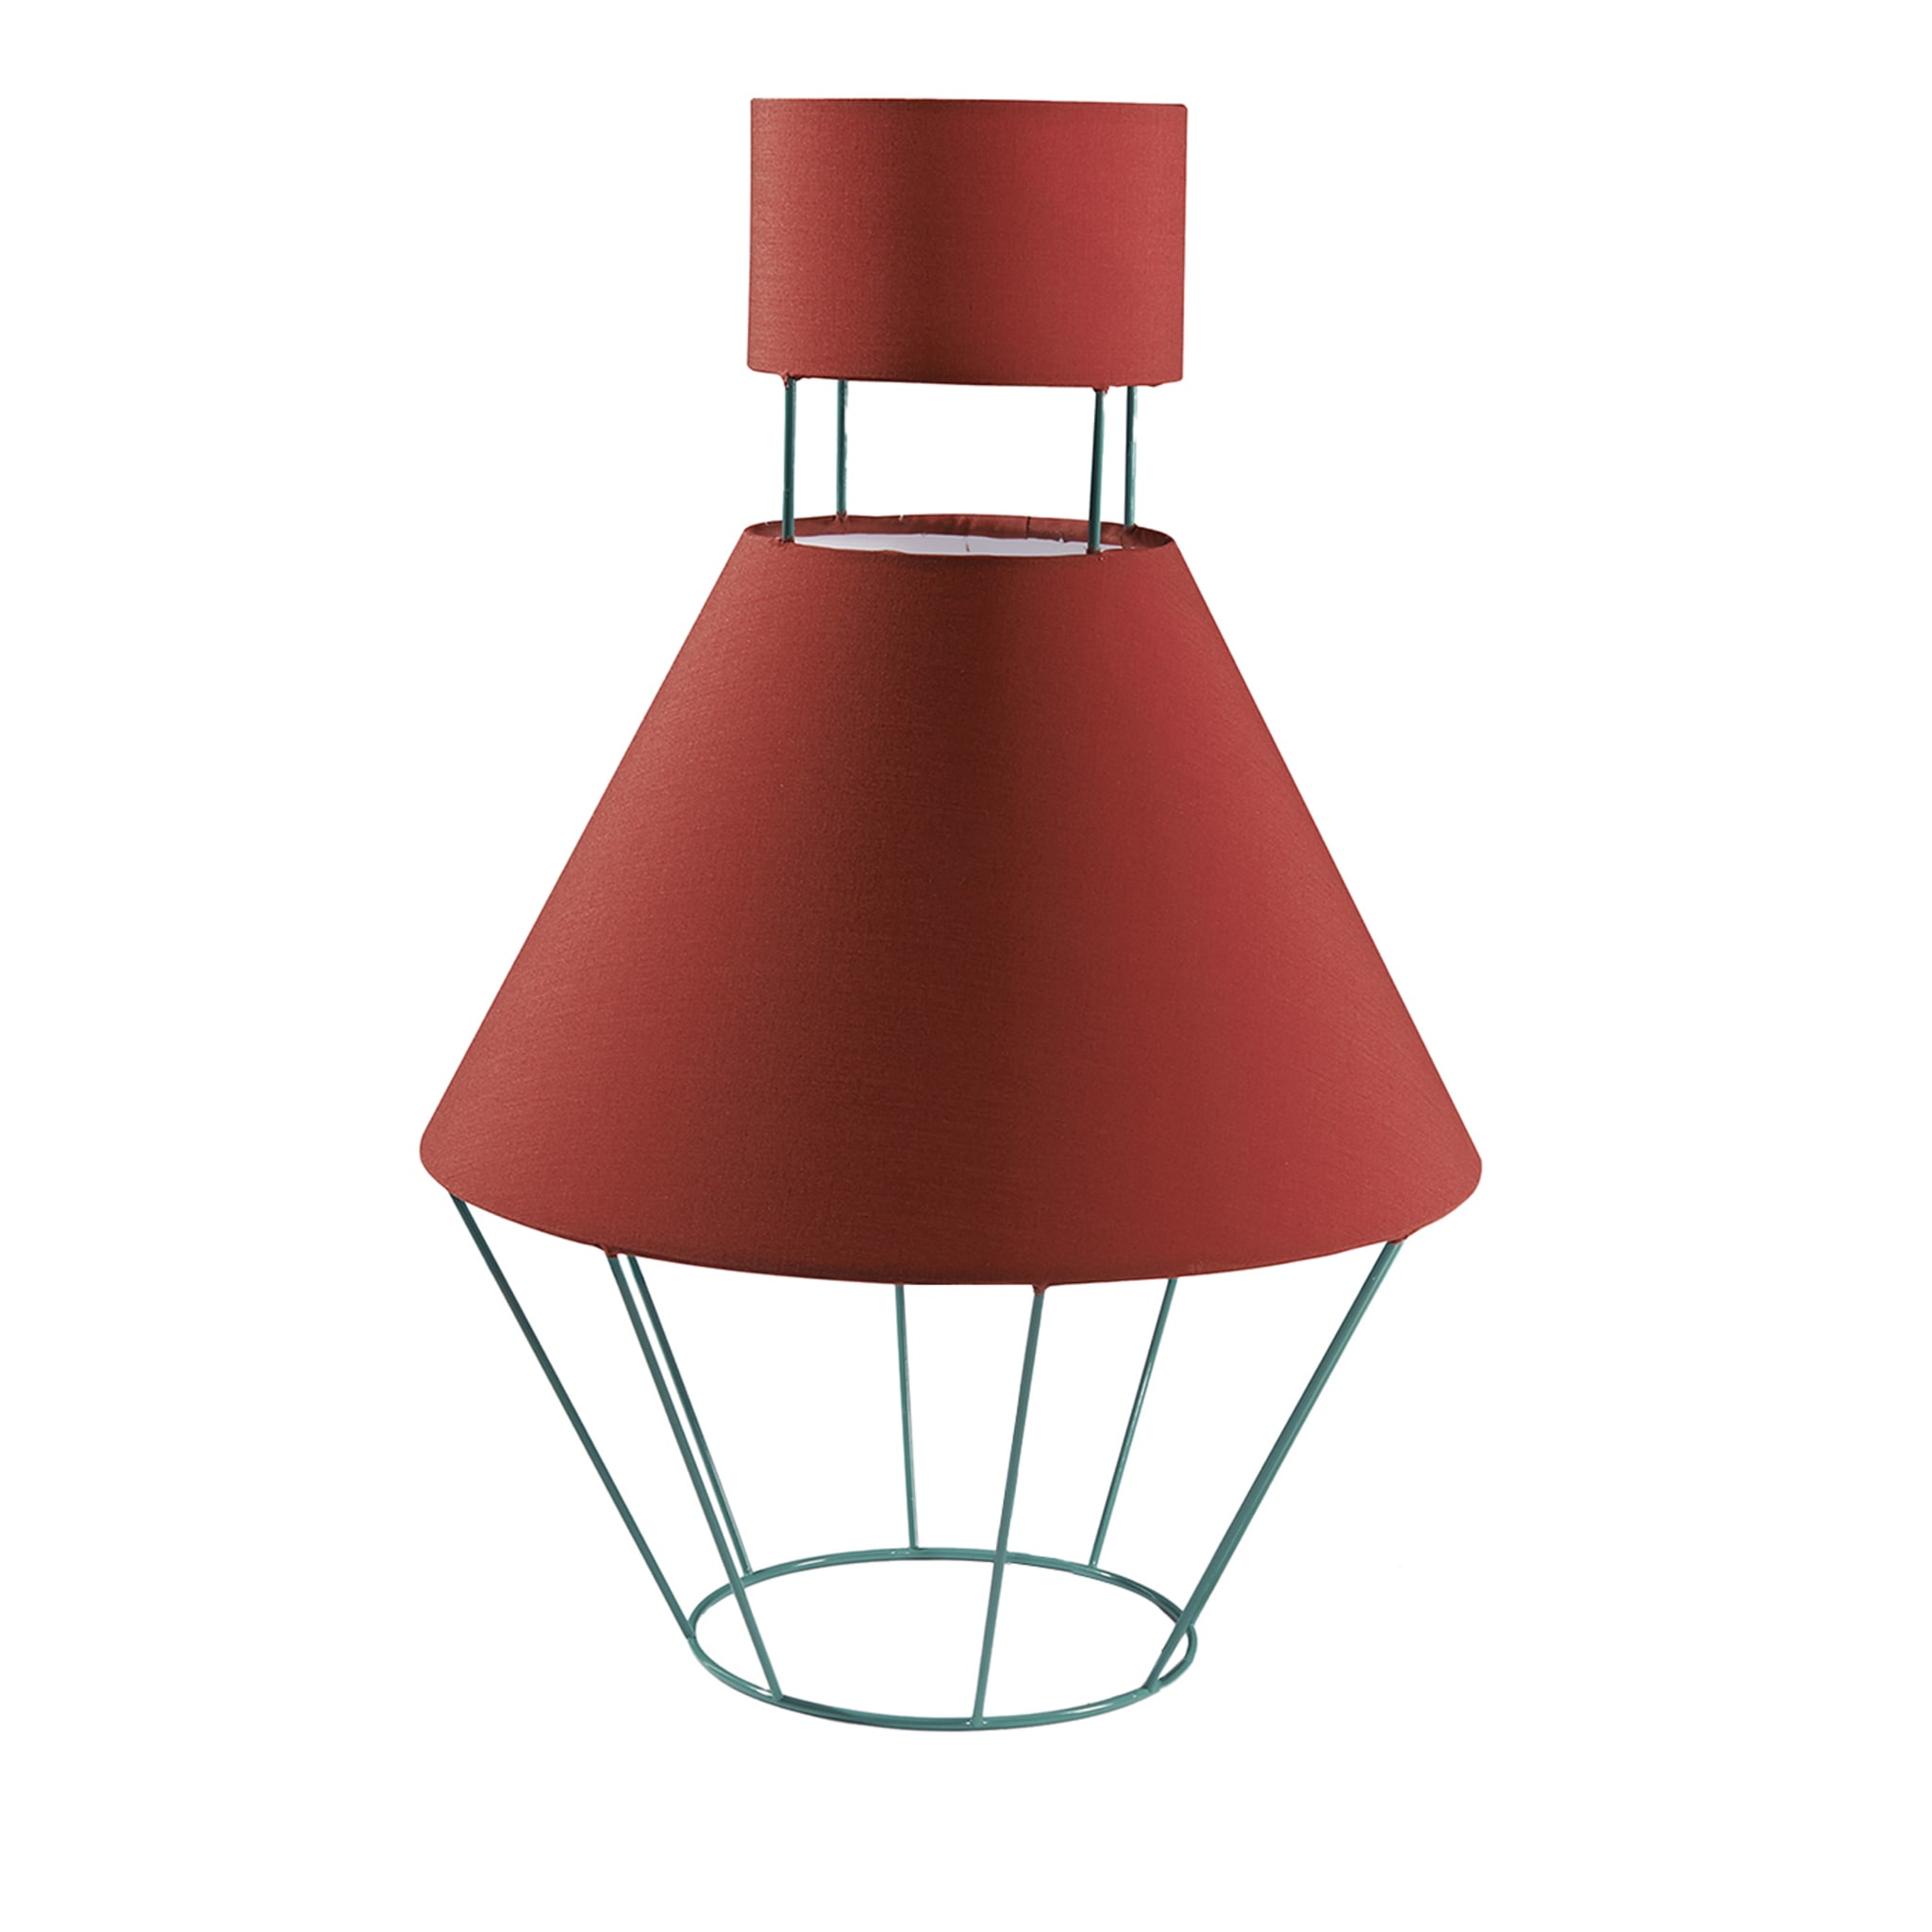 Balloon Mint-Green & Cherry-Red Table Lamp by Giorgia Zanellato - Main view